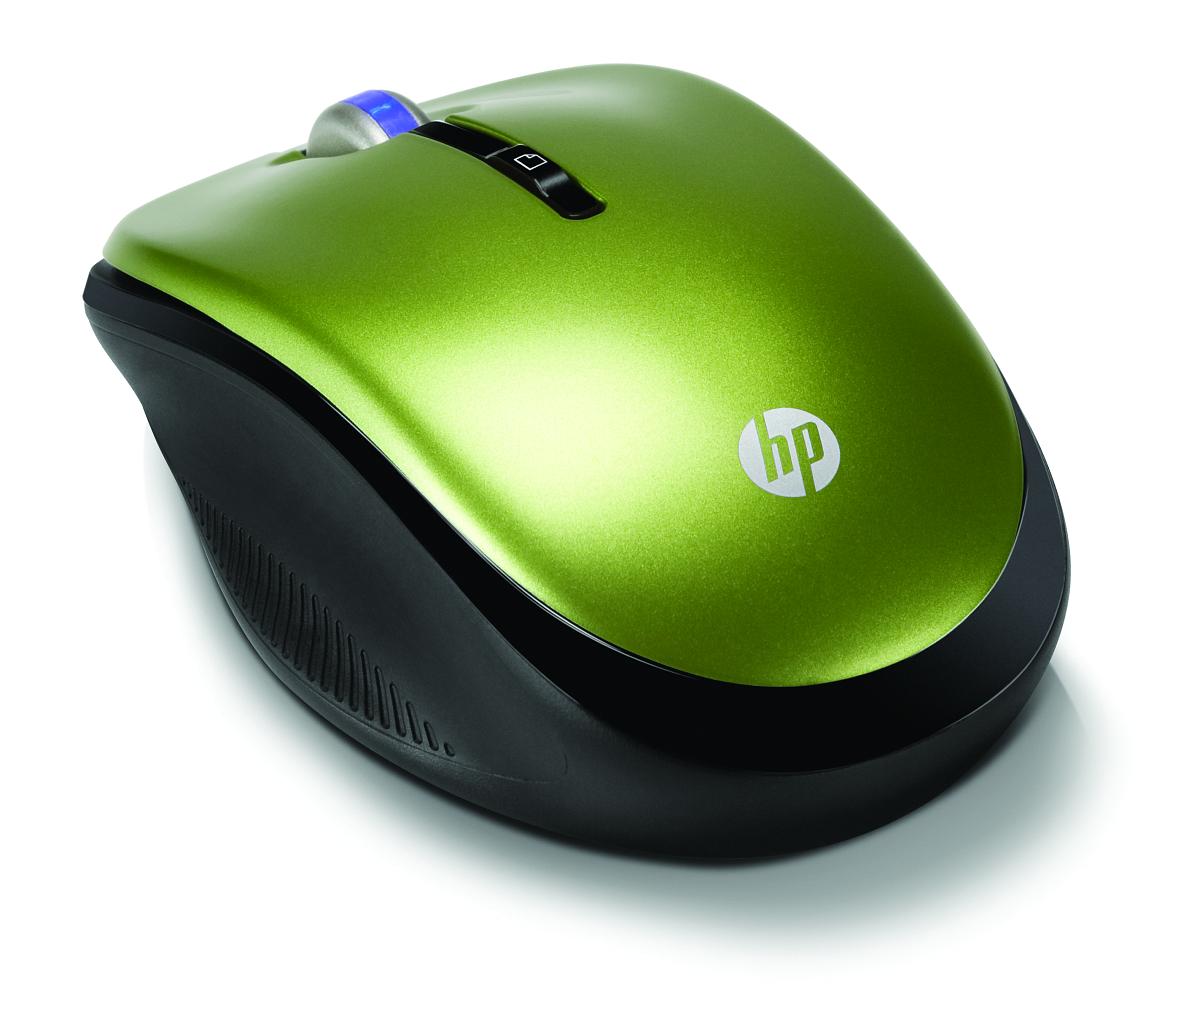 Bezdrátová myš HP - Leaf Green (XP359AA)